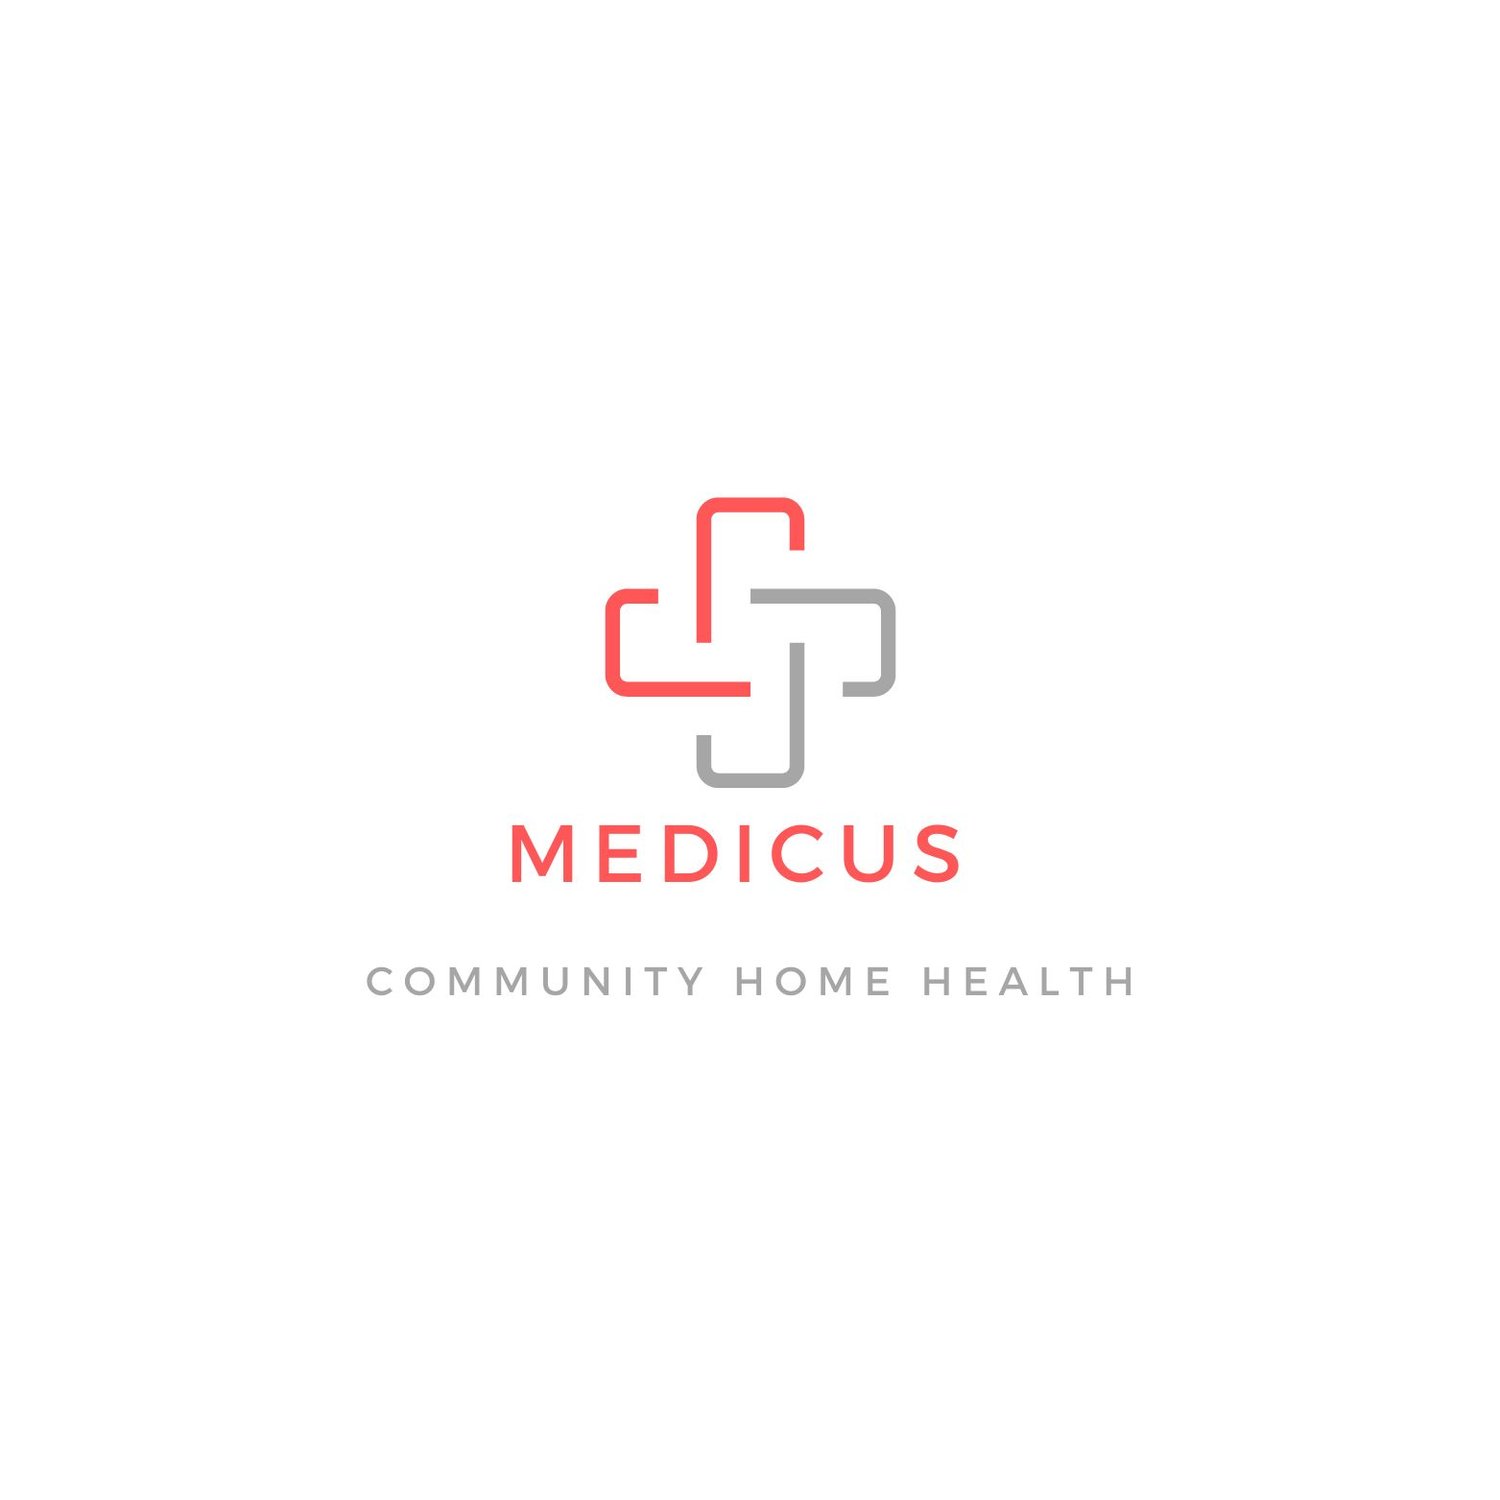 Medicus Community Home Health